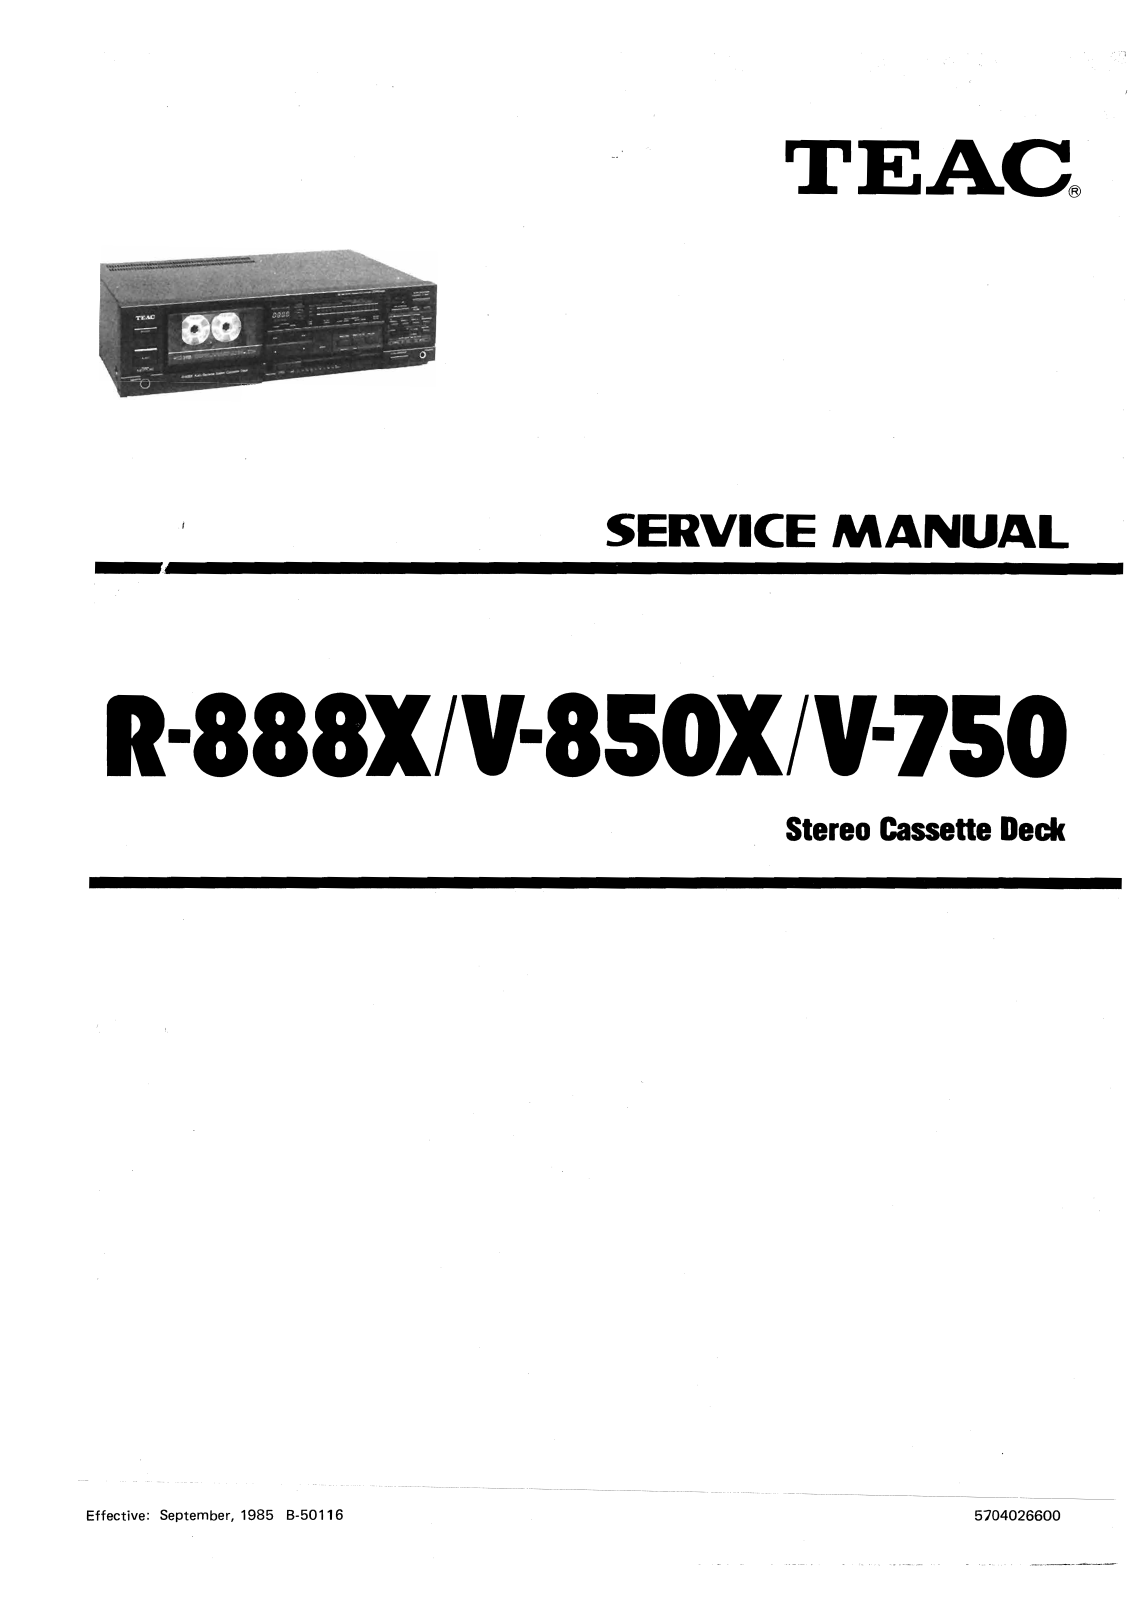 Teac V-850-X, V-750 Service Manual